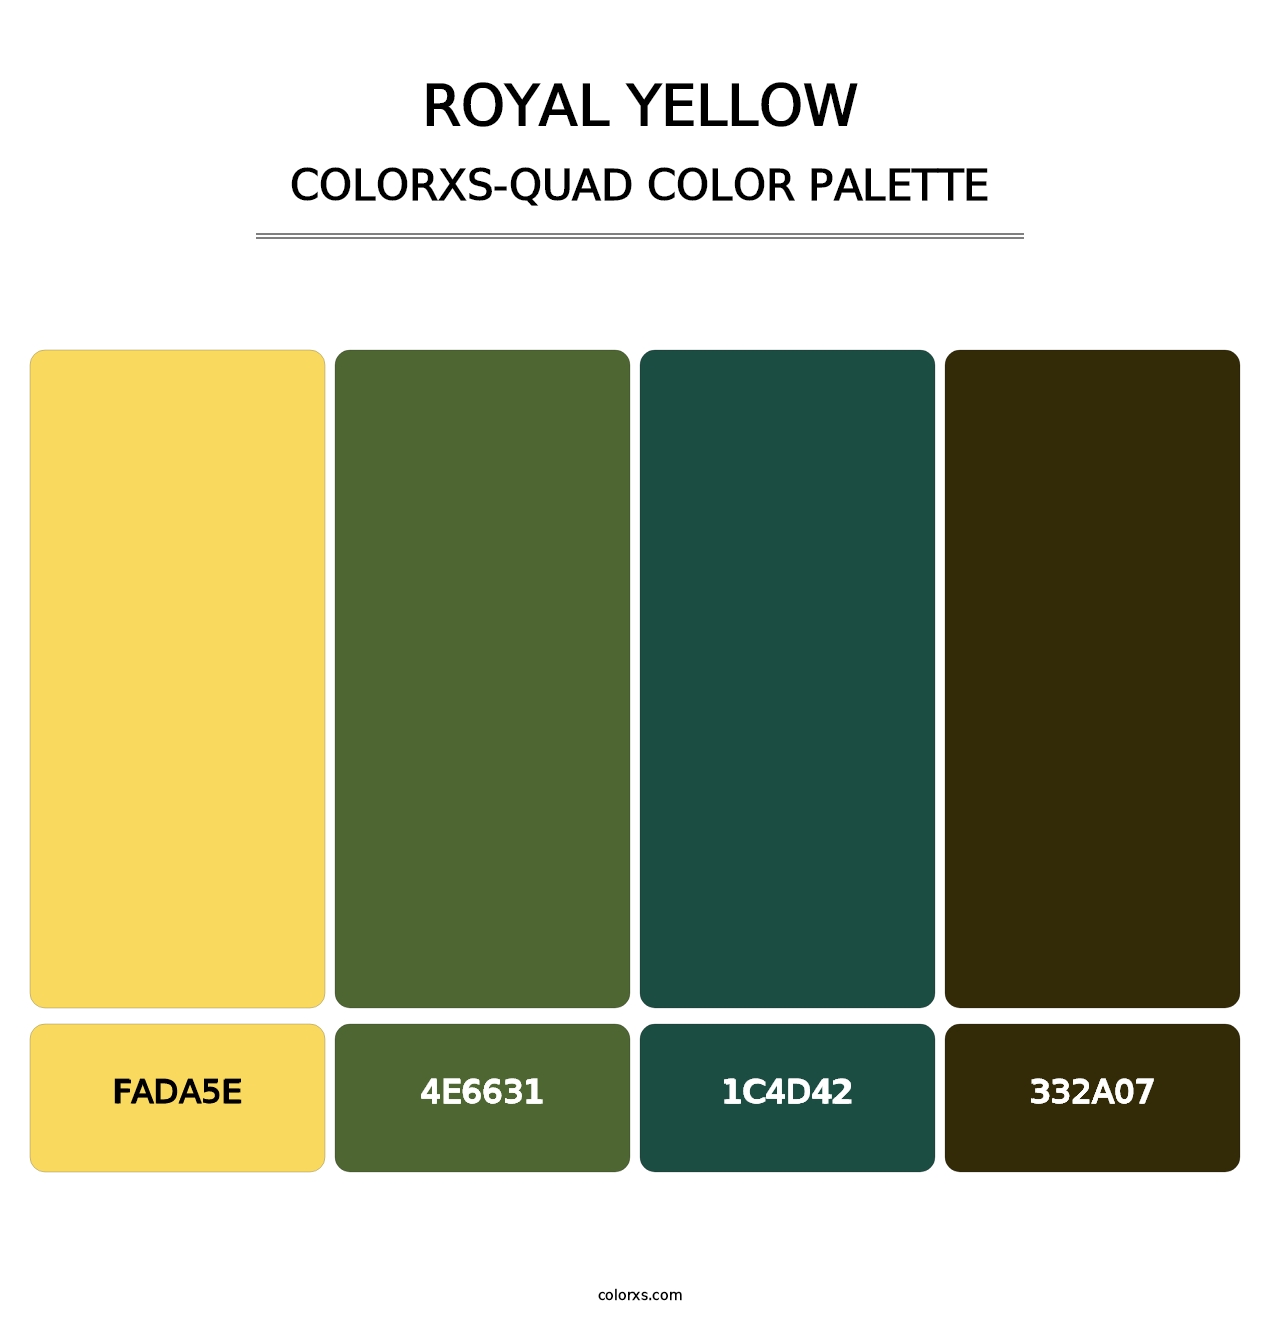 Royal Yellow - Colorxs Quad Palette